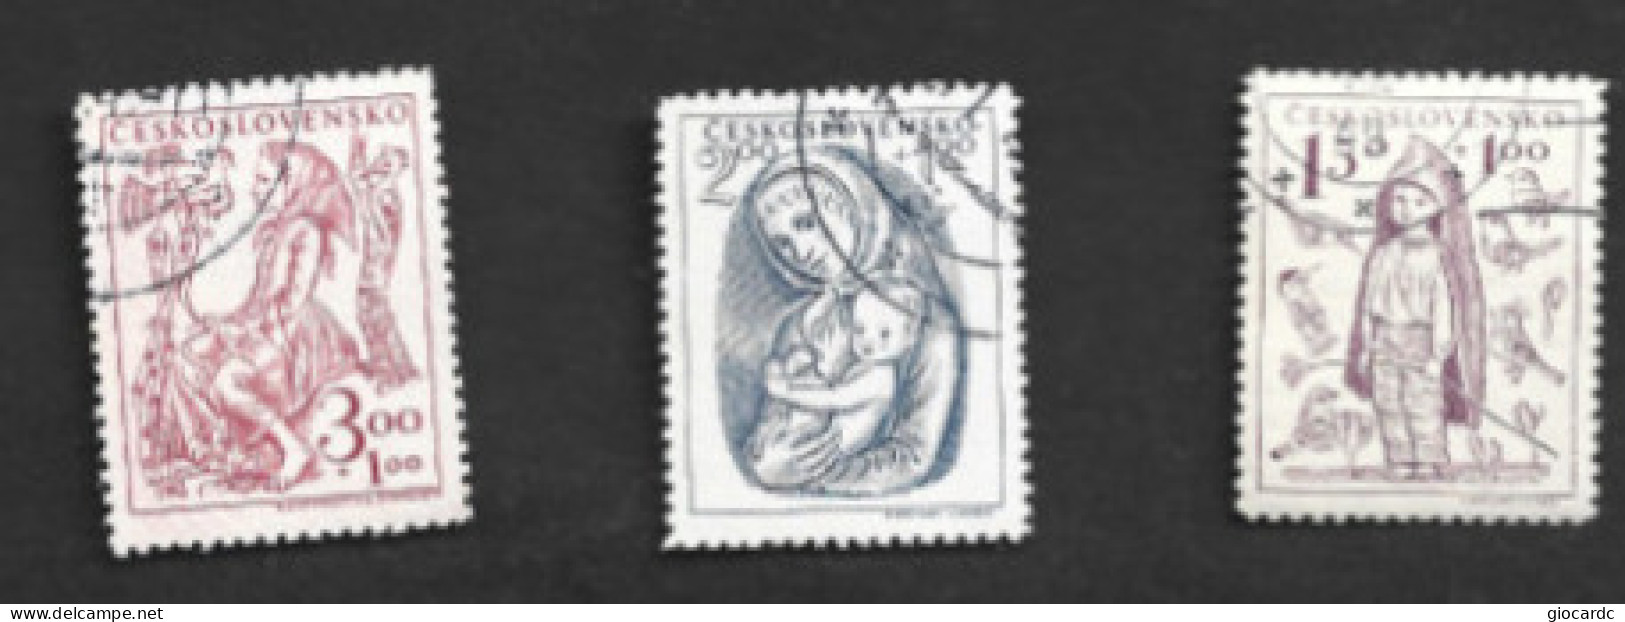 CECOSLOVACCHIA (CZECHOSLOVAKIA) - SG 532.534  - 1948 CHILD WELFARE (COMPLET SET OF 3) - USED - Gebruikt